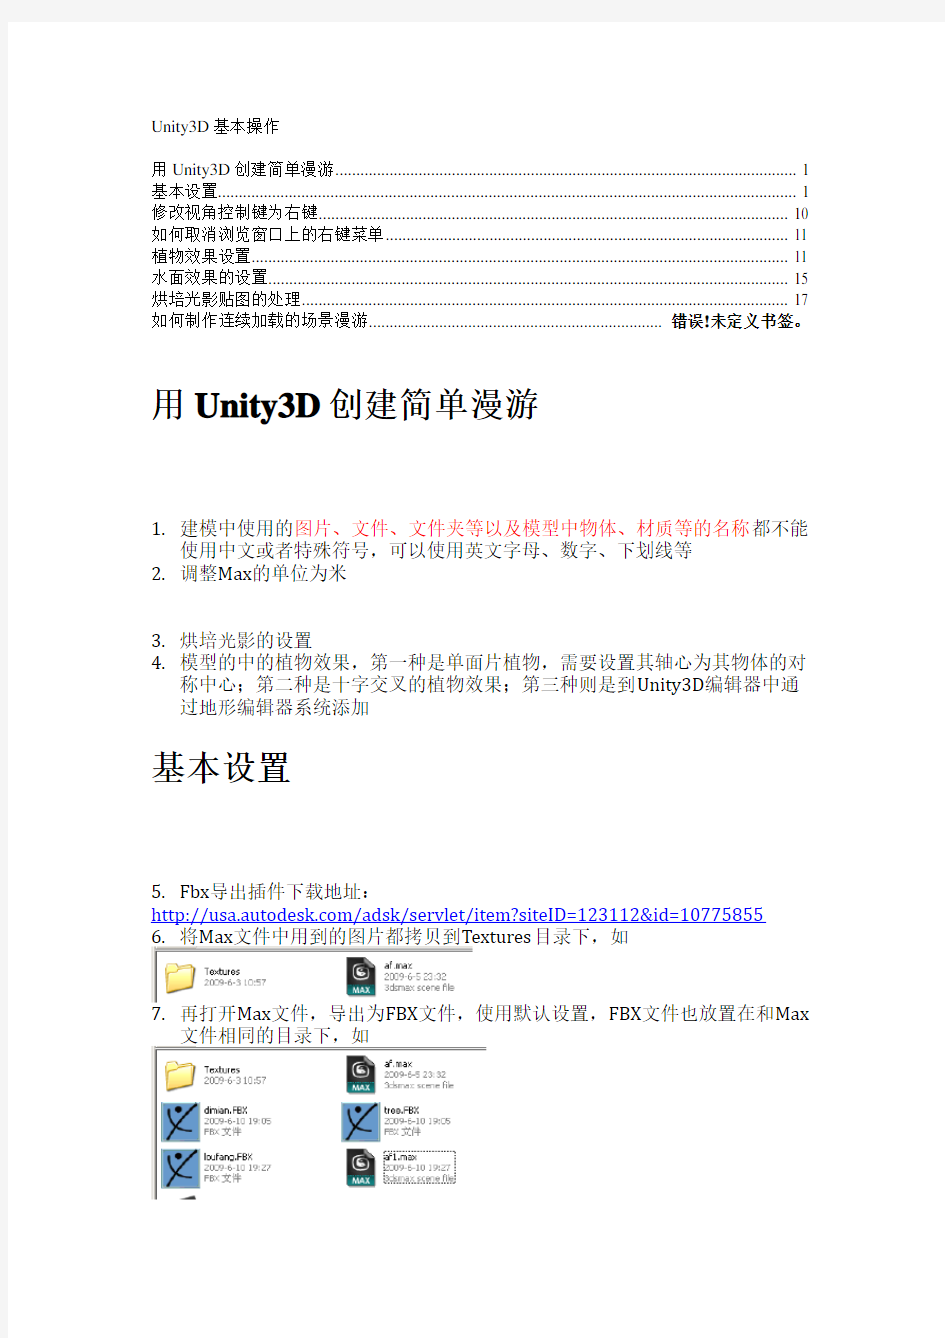 Unity3D入门中文版教材